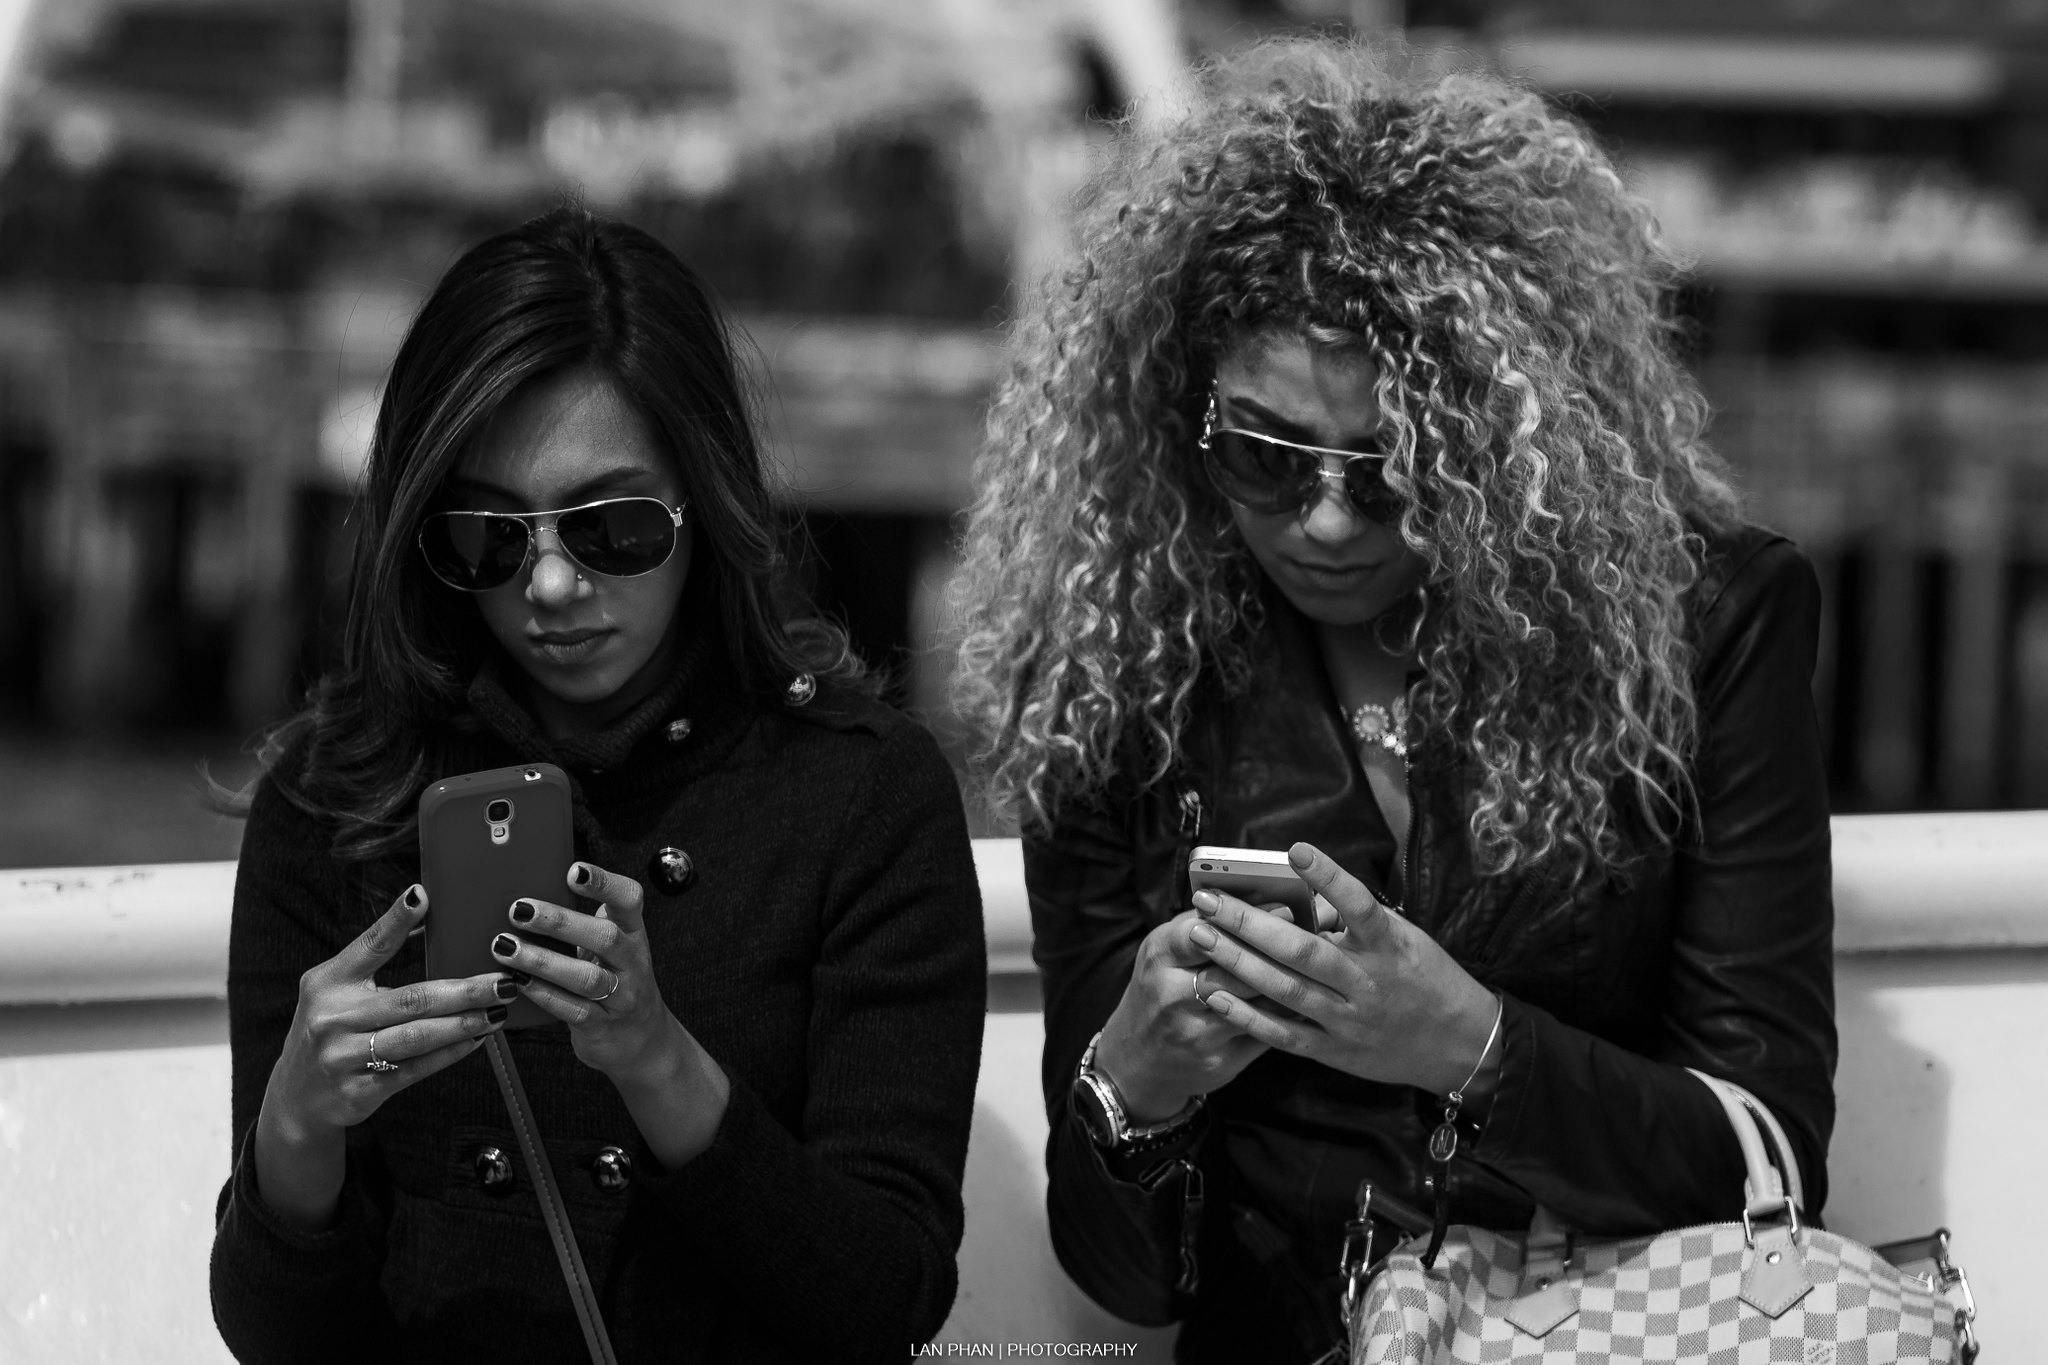 Smartphone Addicts